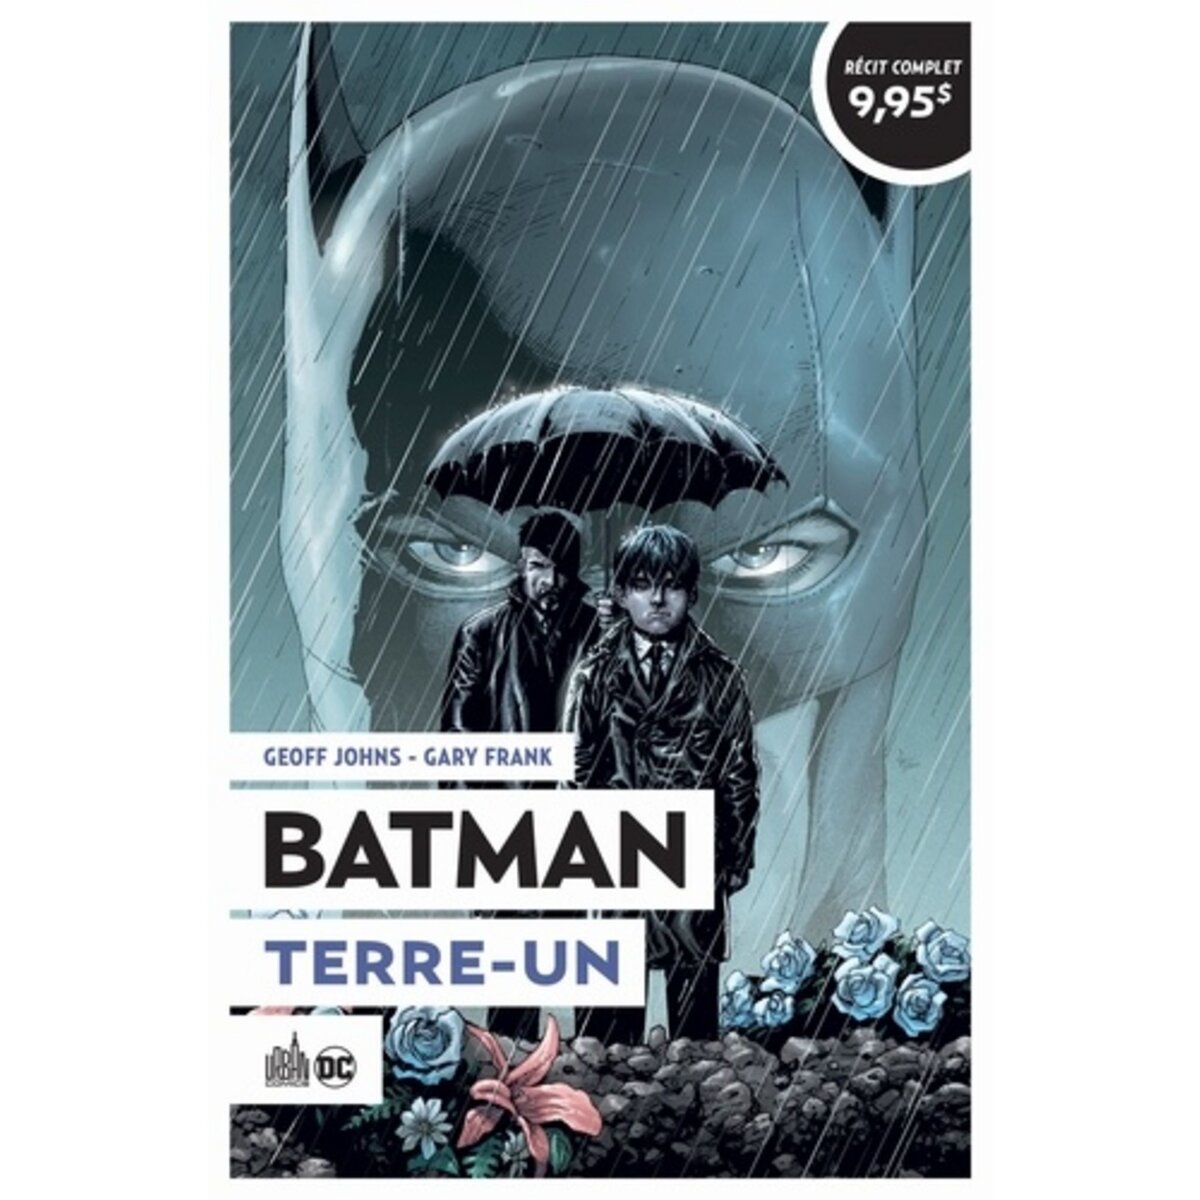  BATMAN TOME 7 : TERRE-UN, Johns Geoff